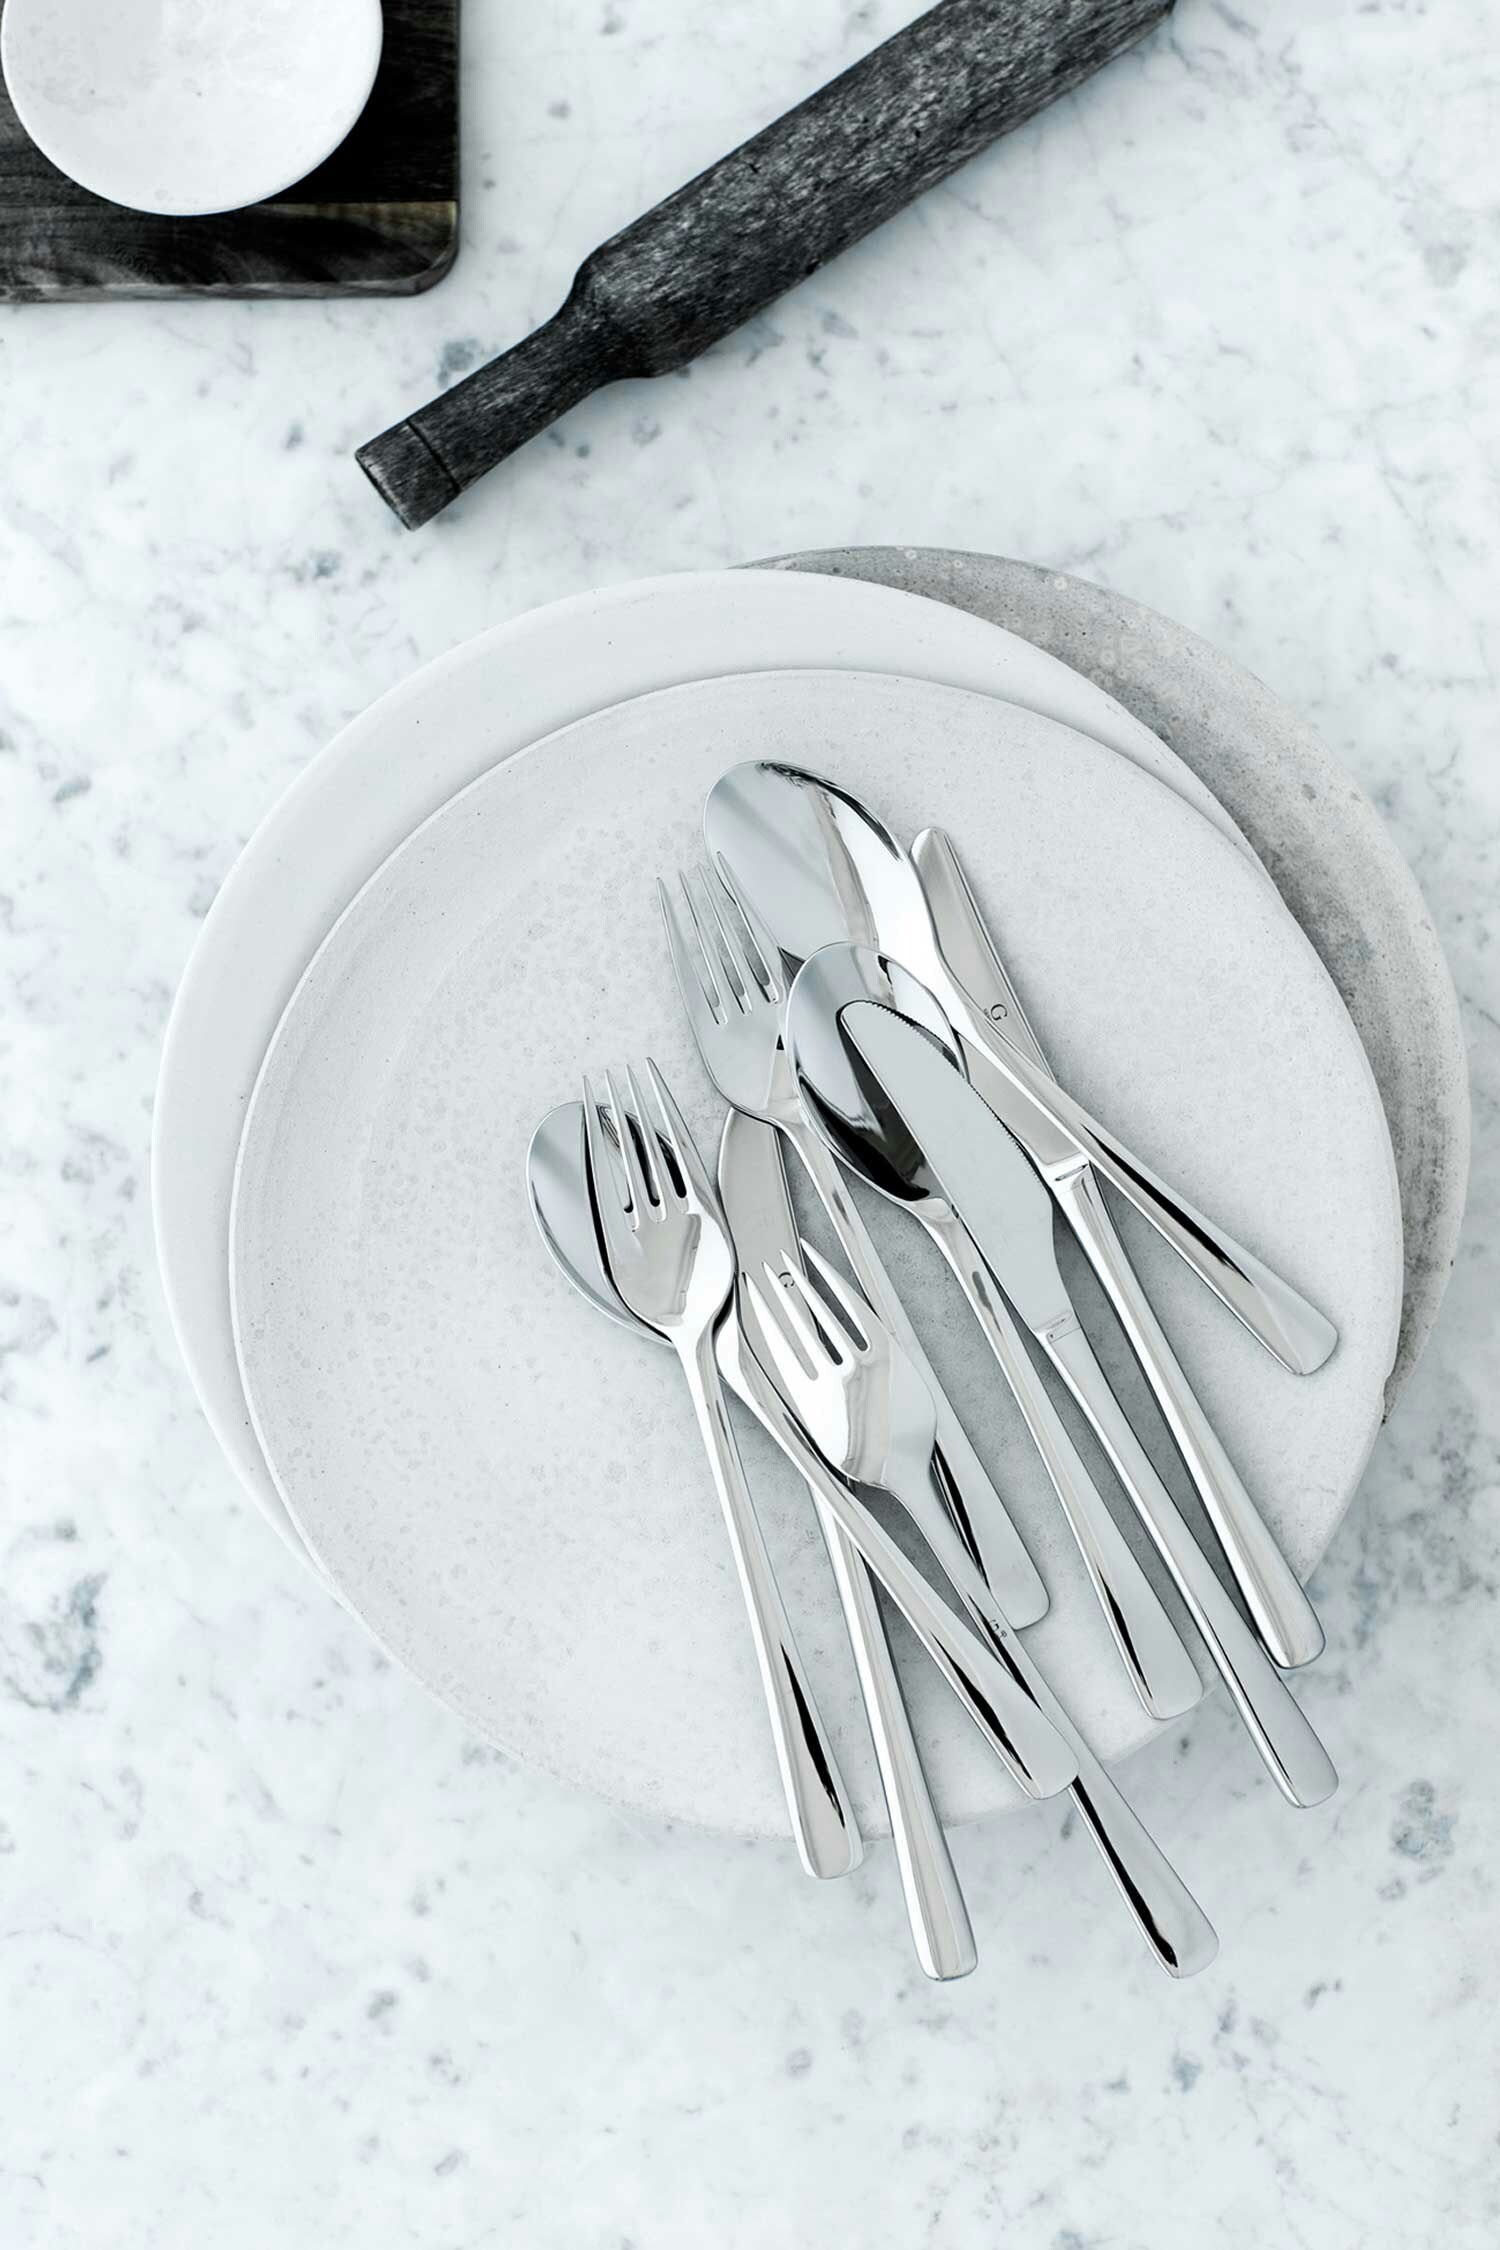 https://royaldesign.com/image/2/gense-steel-line-appetizer-dessert-fork-1